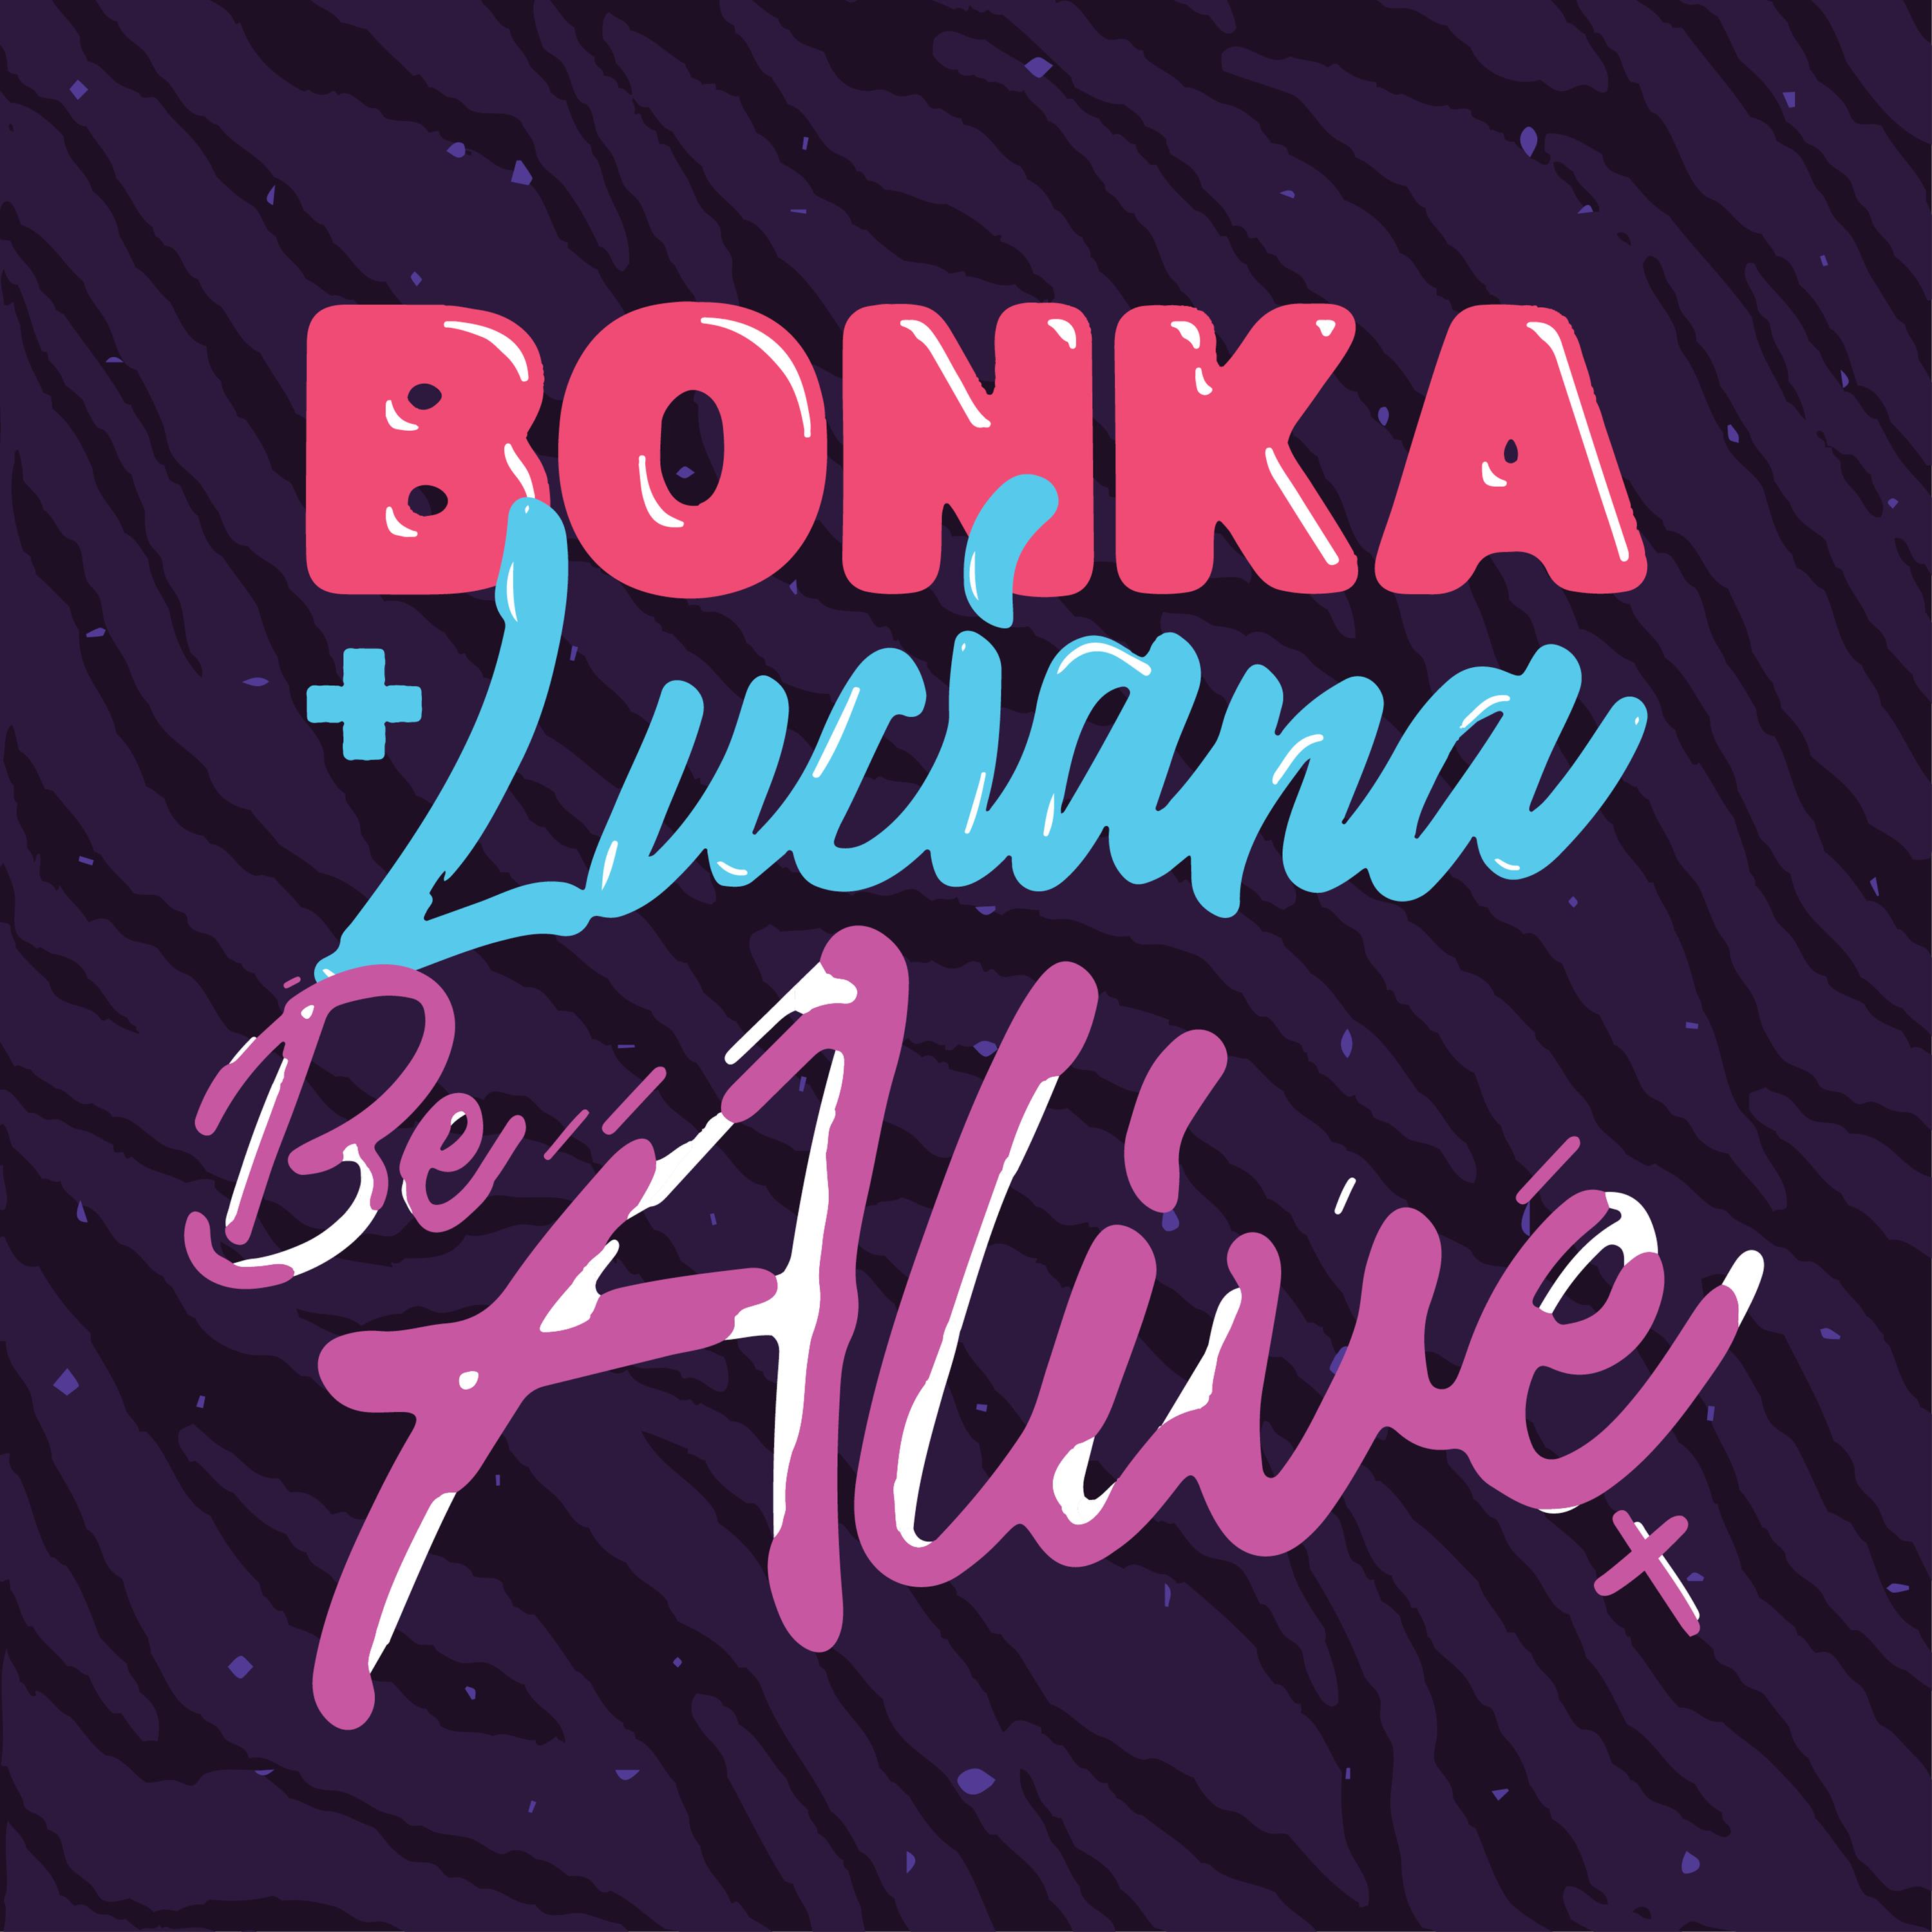 Be Alive (Krunk Remix Edit)